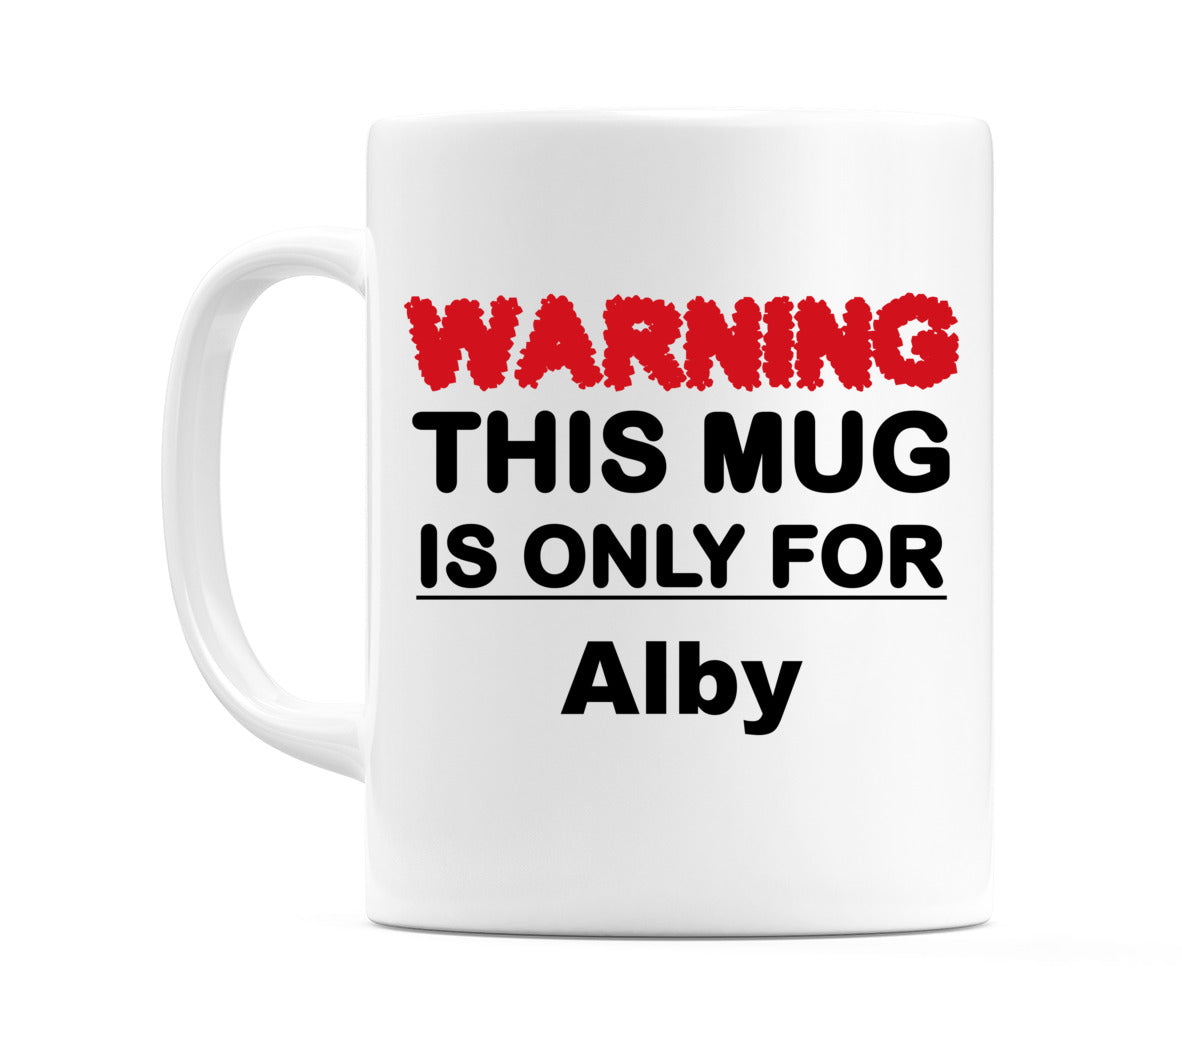 Warning This Mug is ONLY for Alby Mug